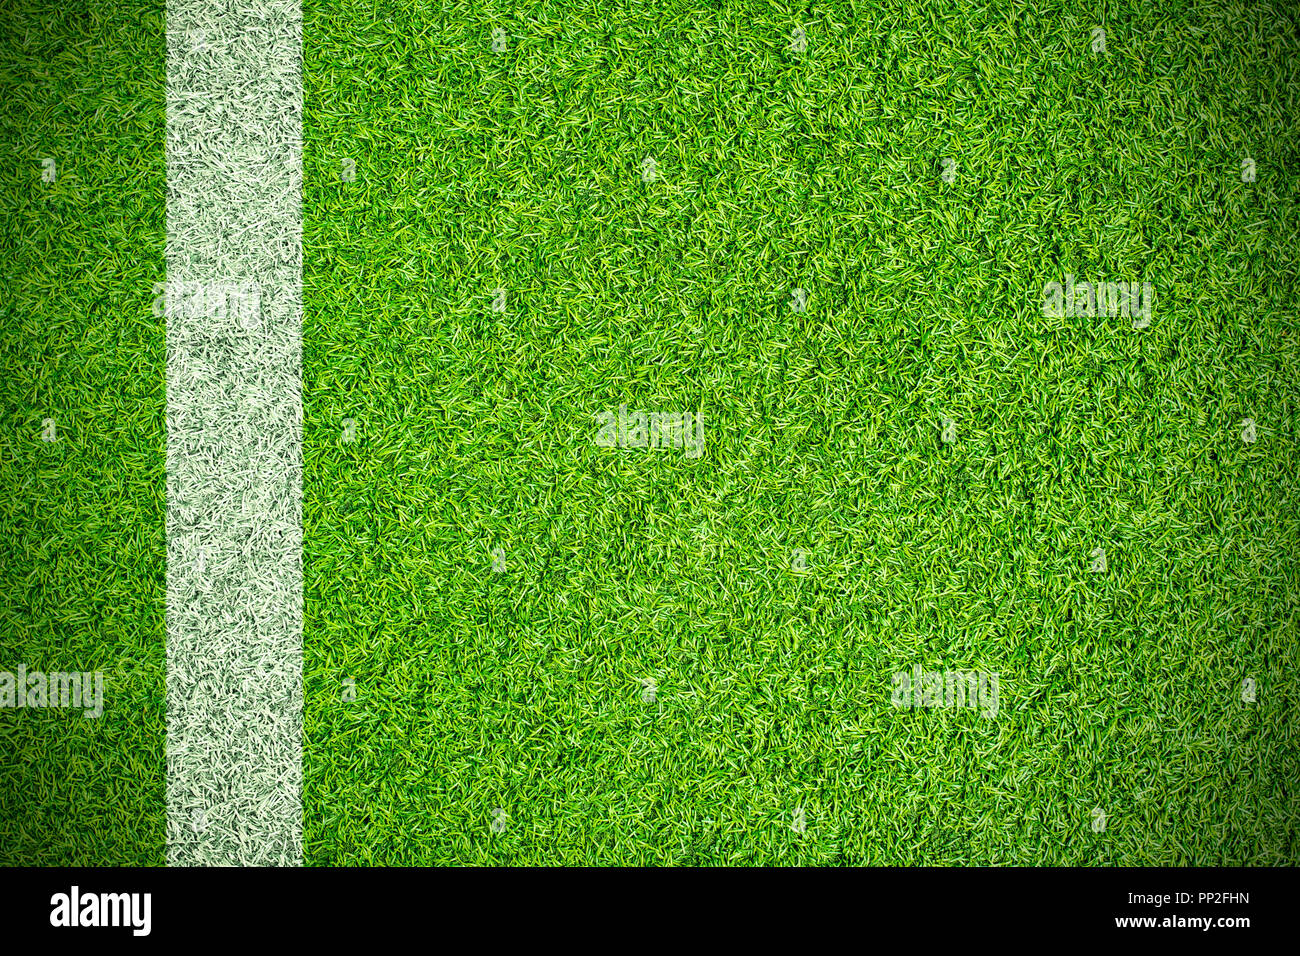 Grüne Gras sport Feld mit weißem Streifen Stockfoto